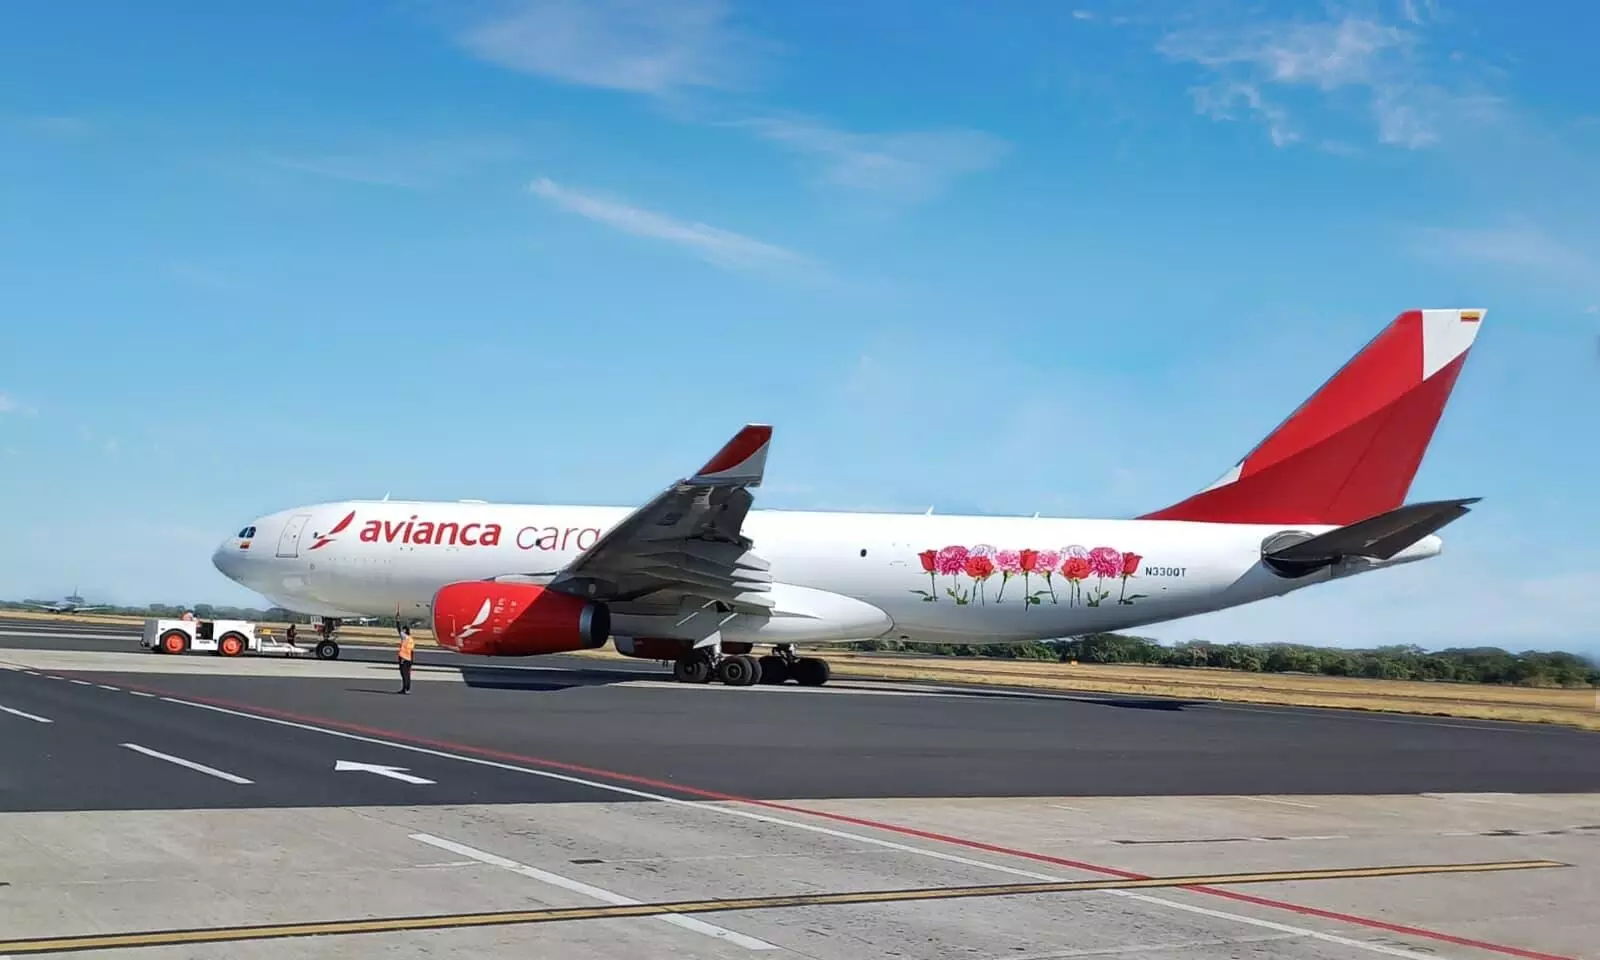 Avianca Cargo transports 18,000 tonnes flowers